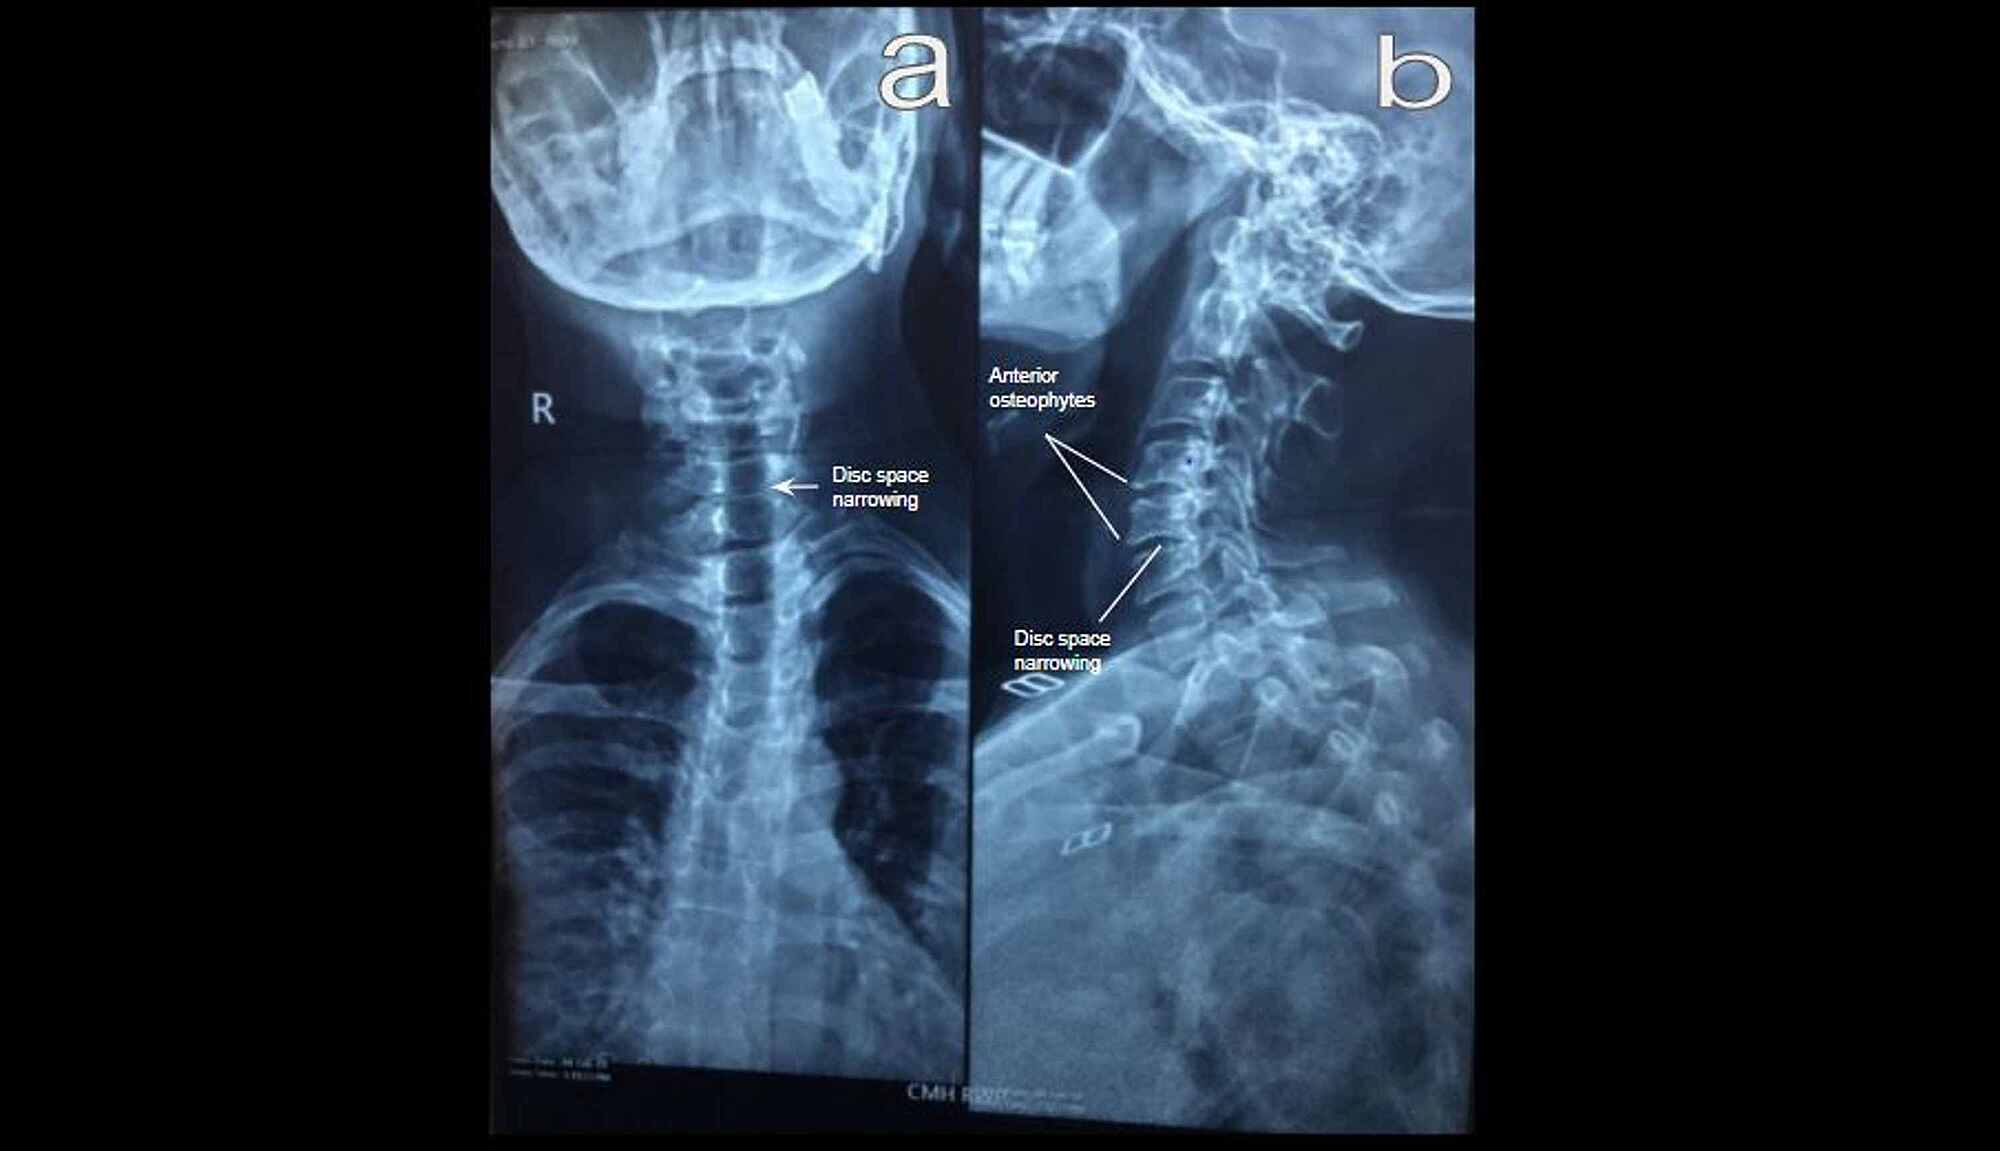 x ray cervical spine cost scottsdale az